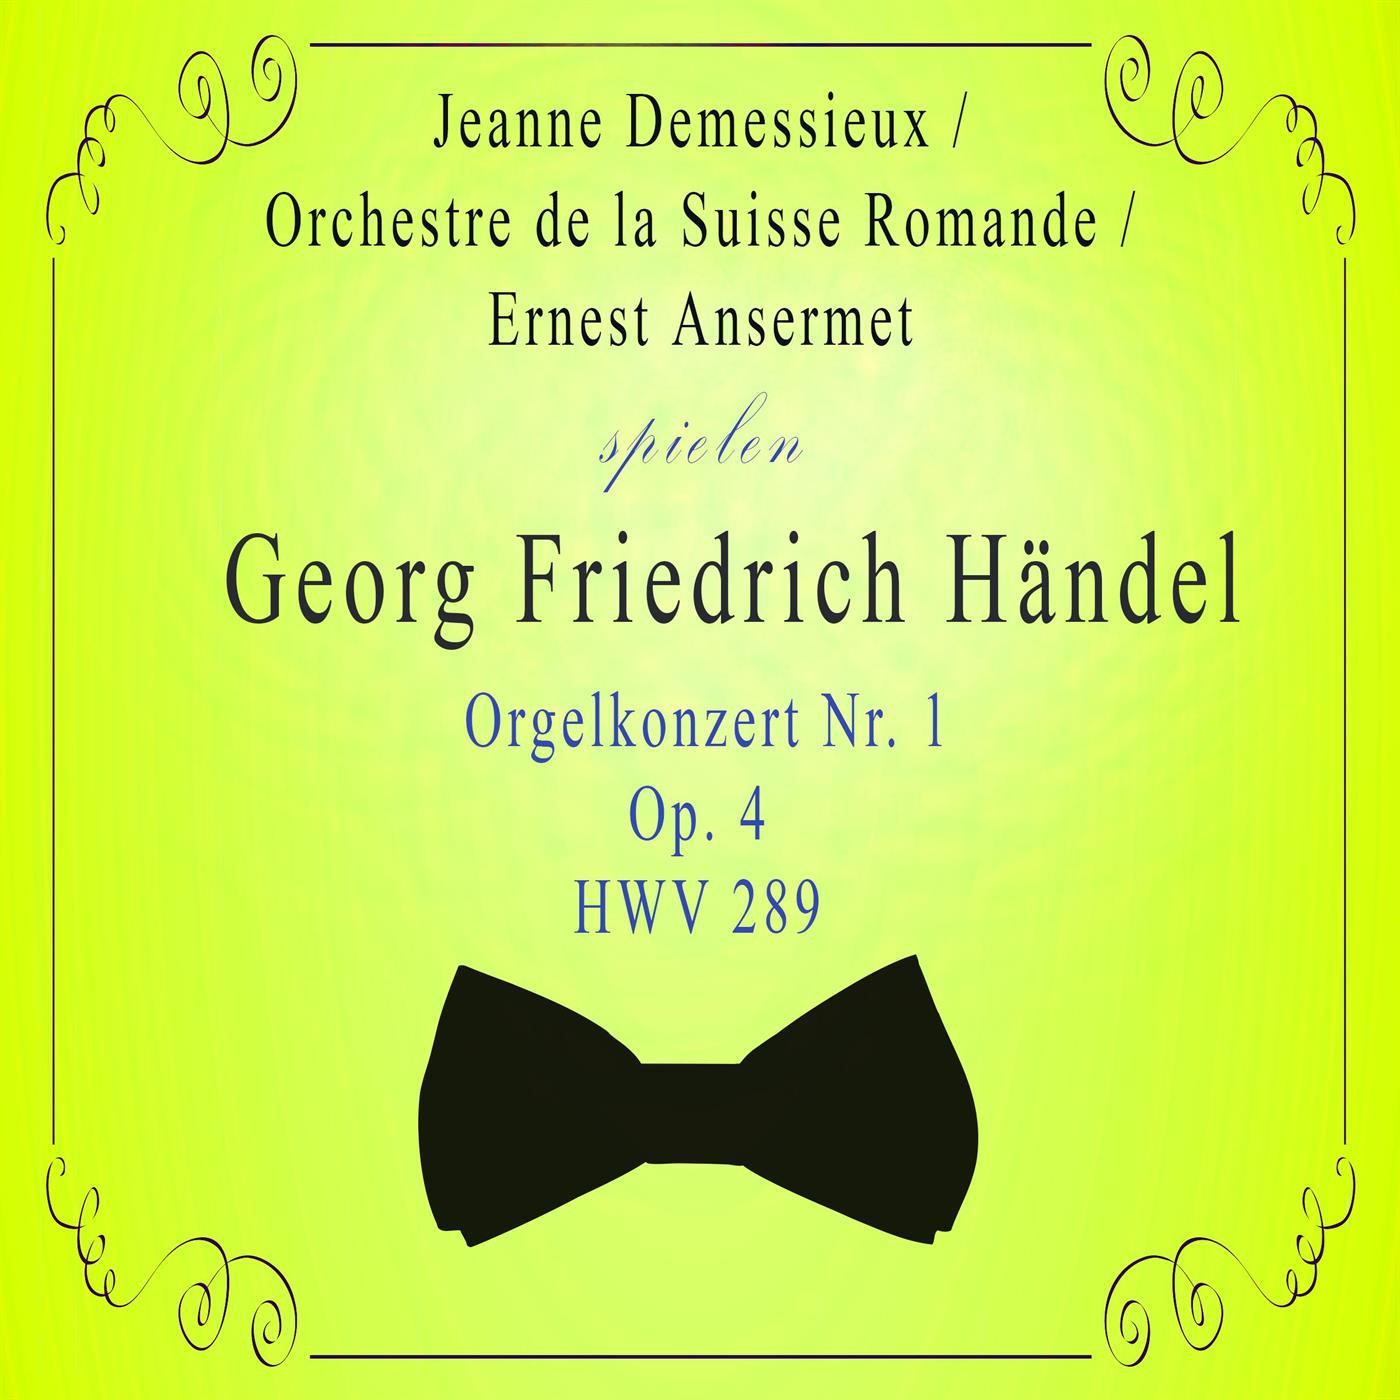 Jeanne Demessieux  Orchestre de la Suisse Romande  Ernest Ansermet spielen: Georg Friedrich H ndel: Orgelkonzert Nr. 1, Op. 4, HWV 289